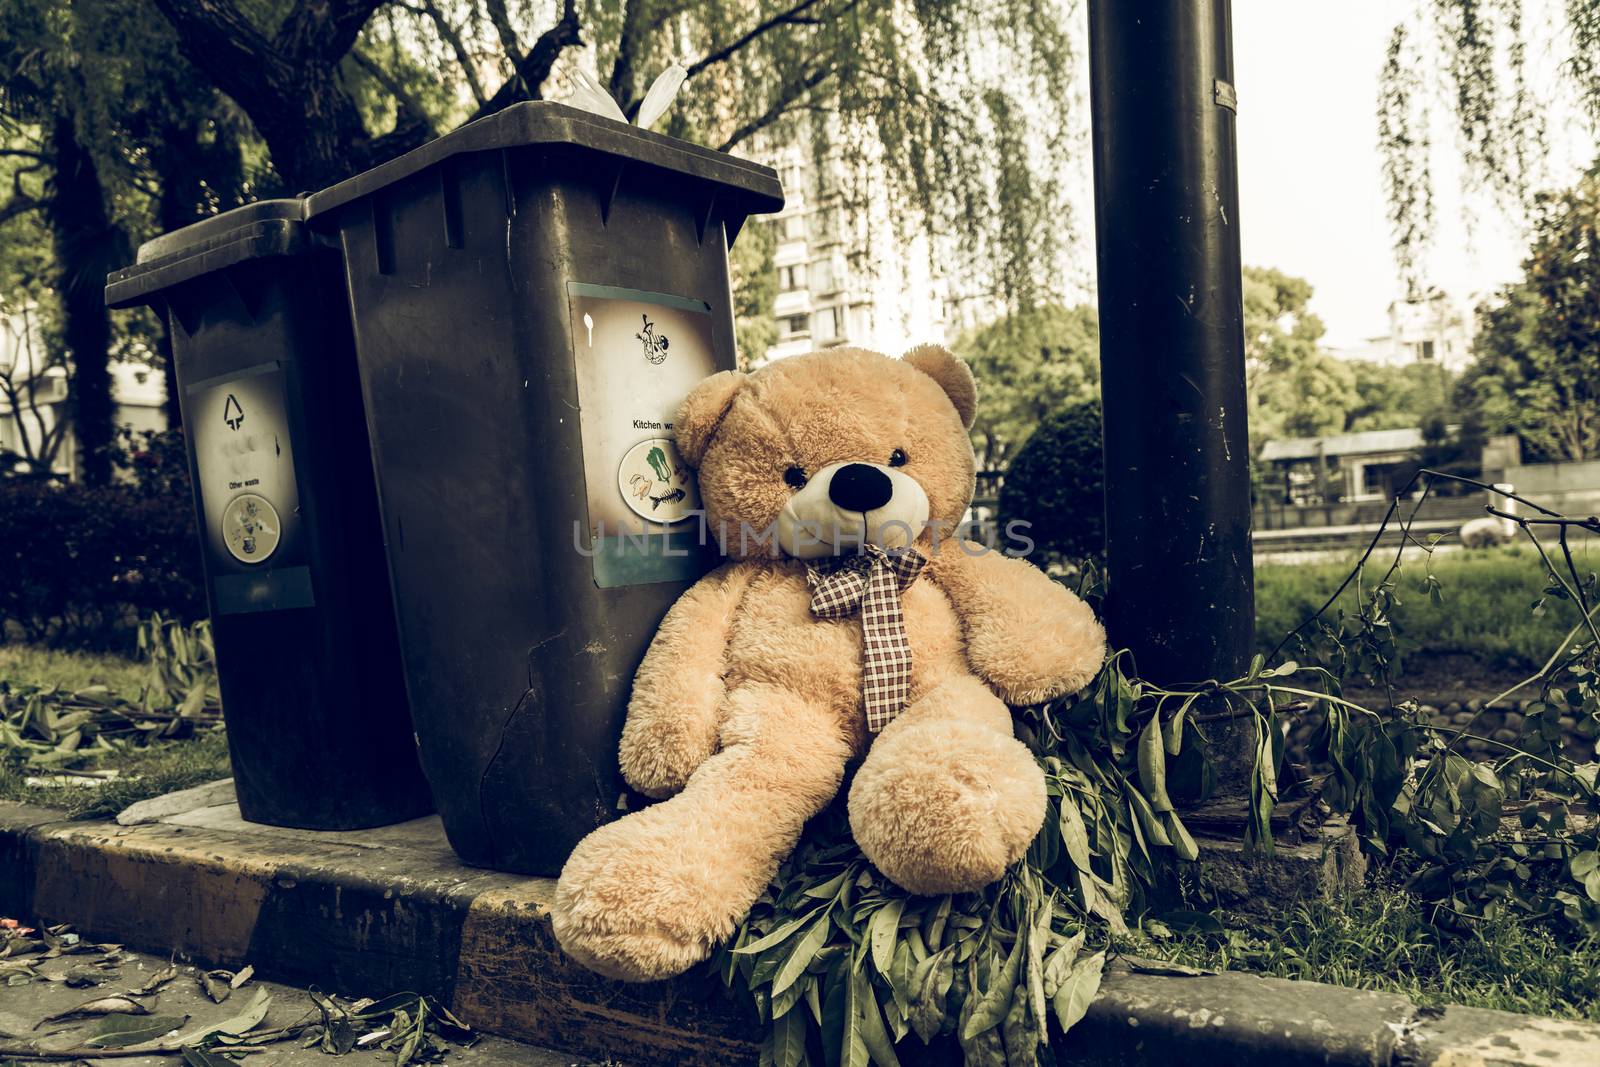 The teddy-bear was throw away sitting beside the garbage trash